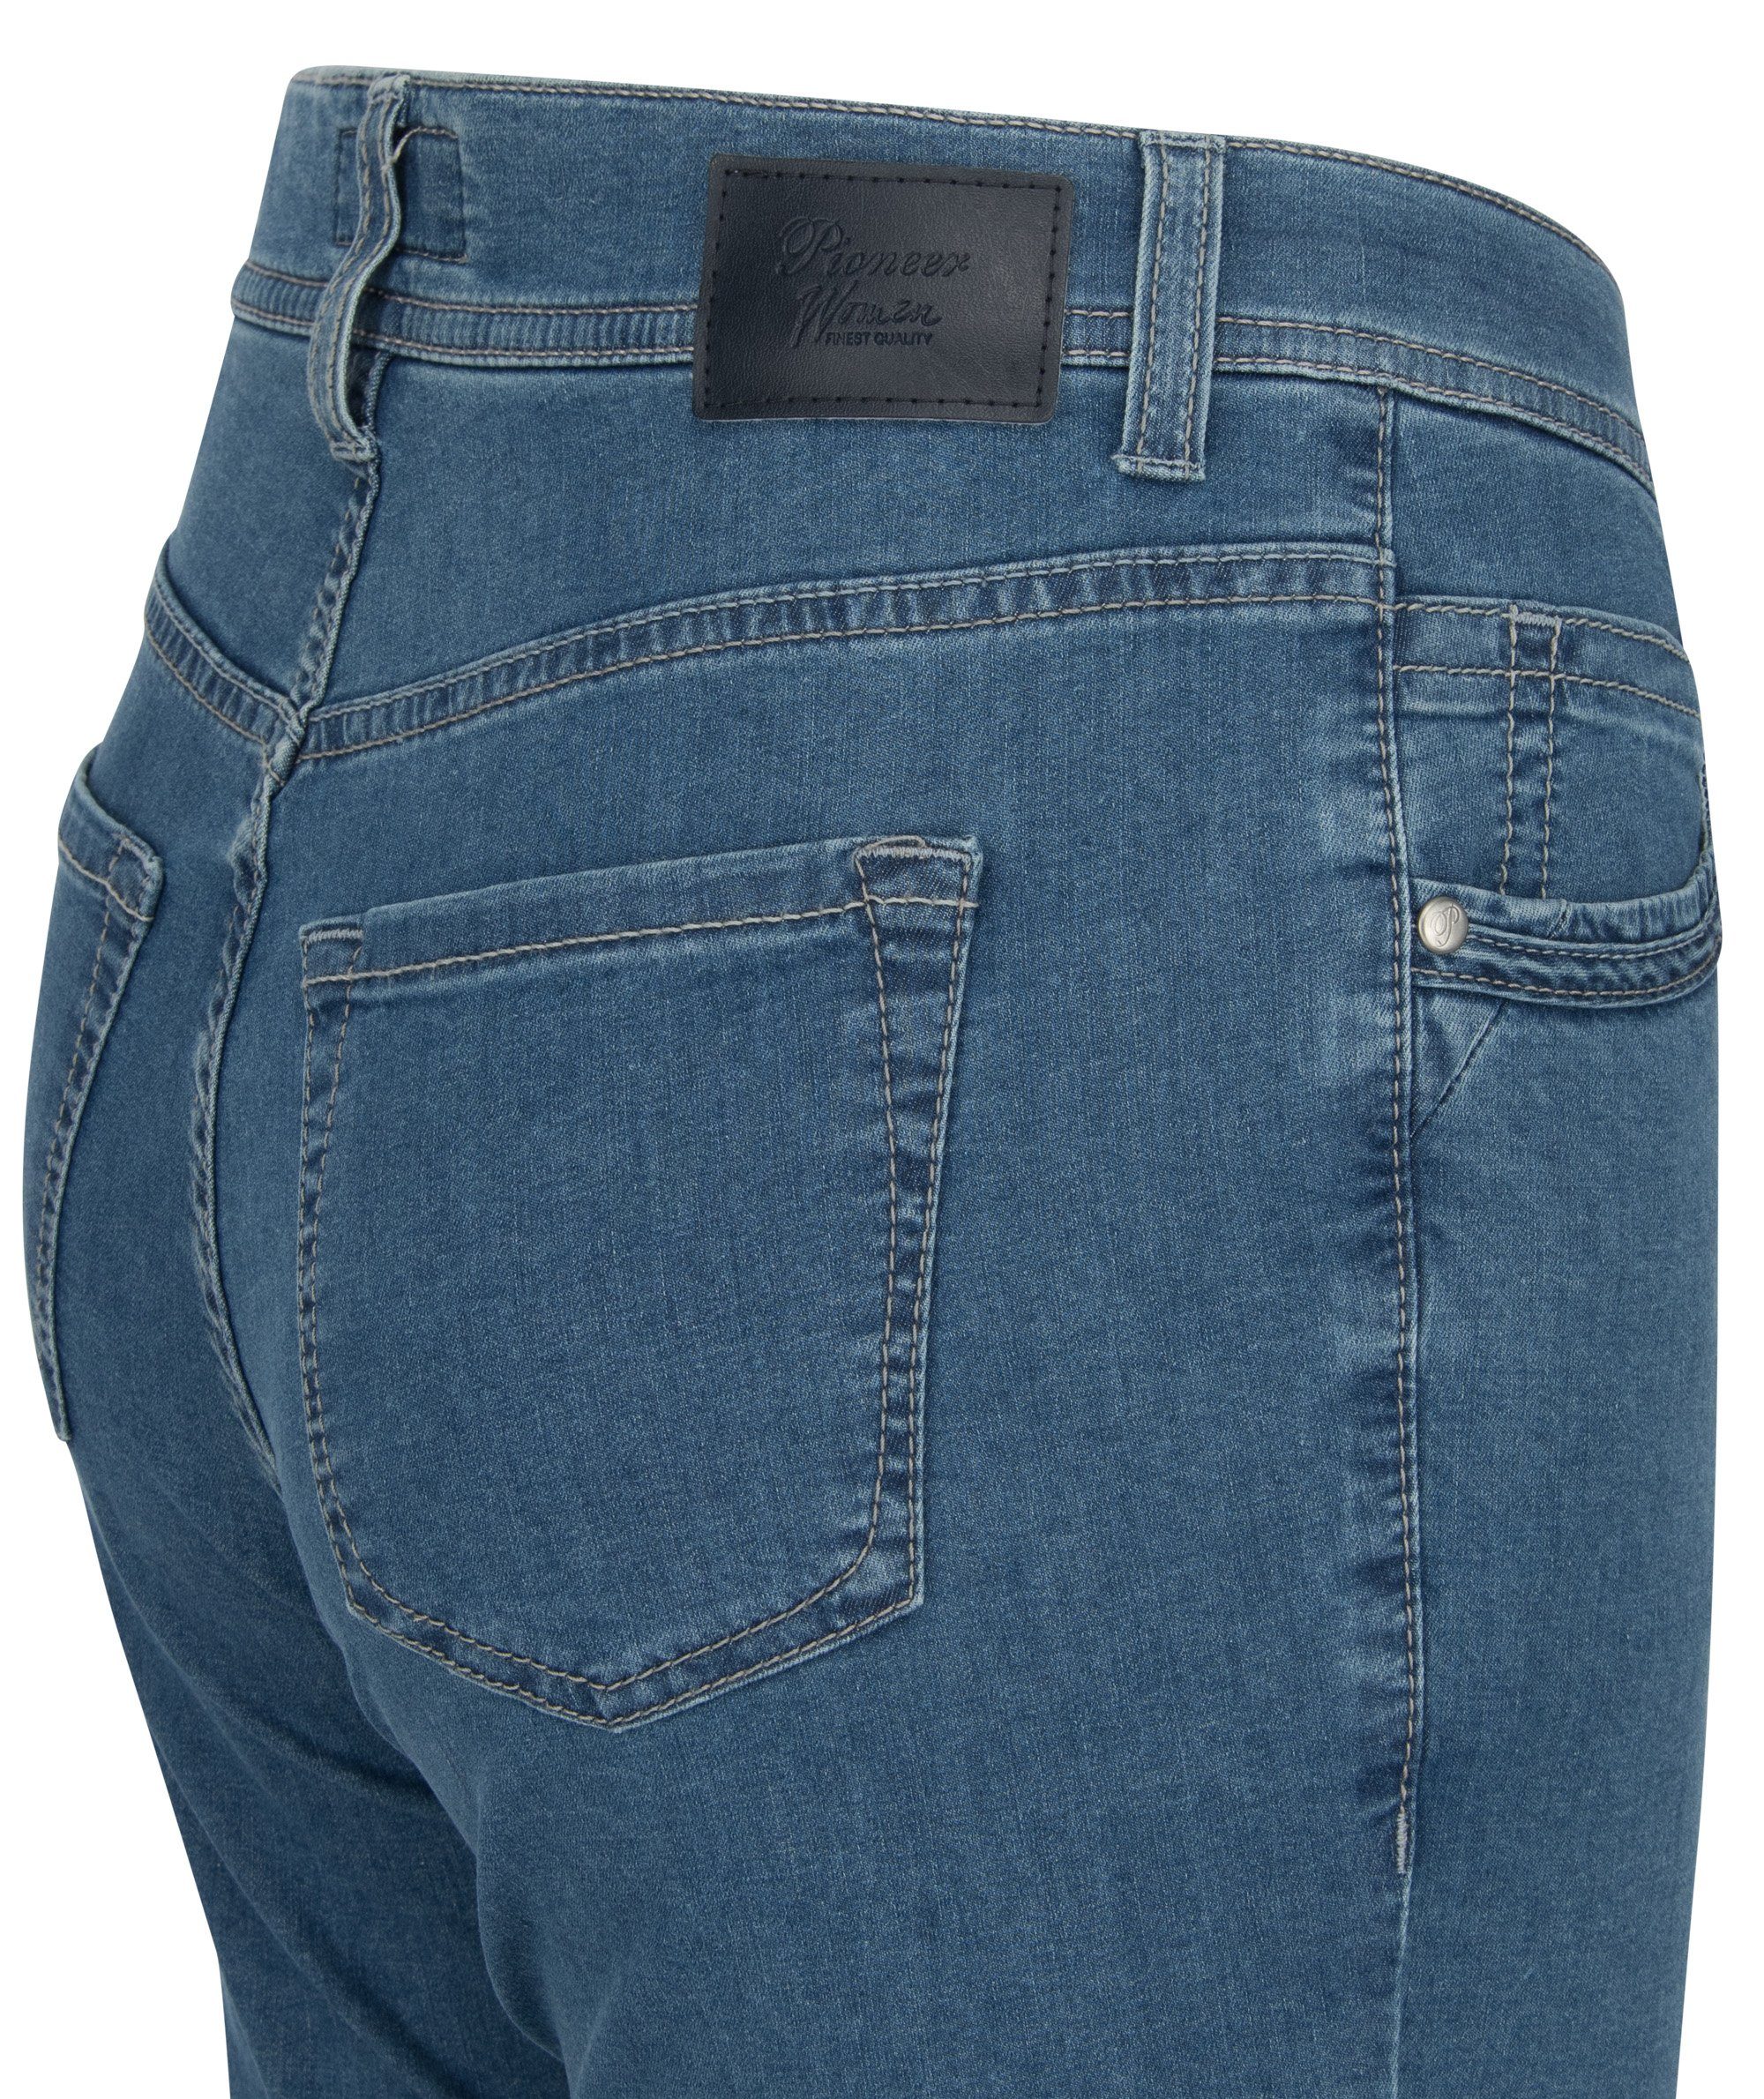 Pioneer Authentic Jeans Stretch-Jeans PIONEER - 3503 blue light BETTY 4005.6841 stonewash CAPRI POWERSTRETCH